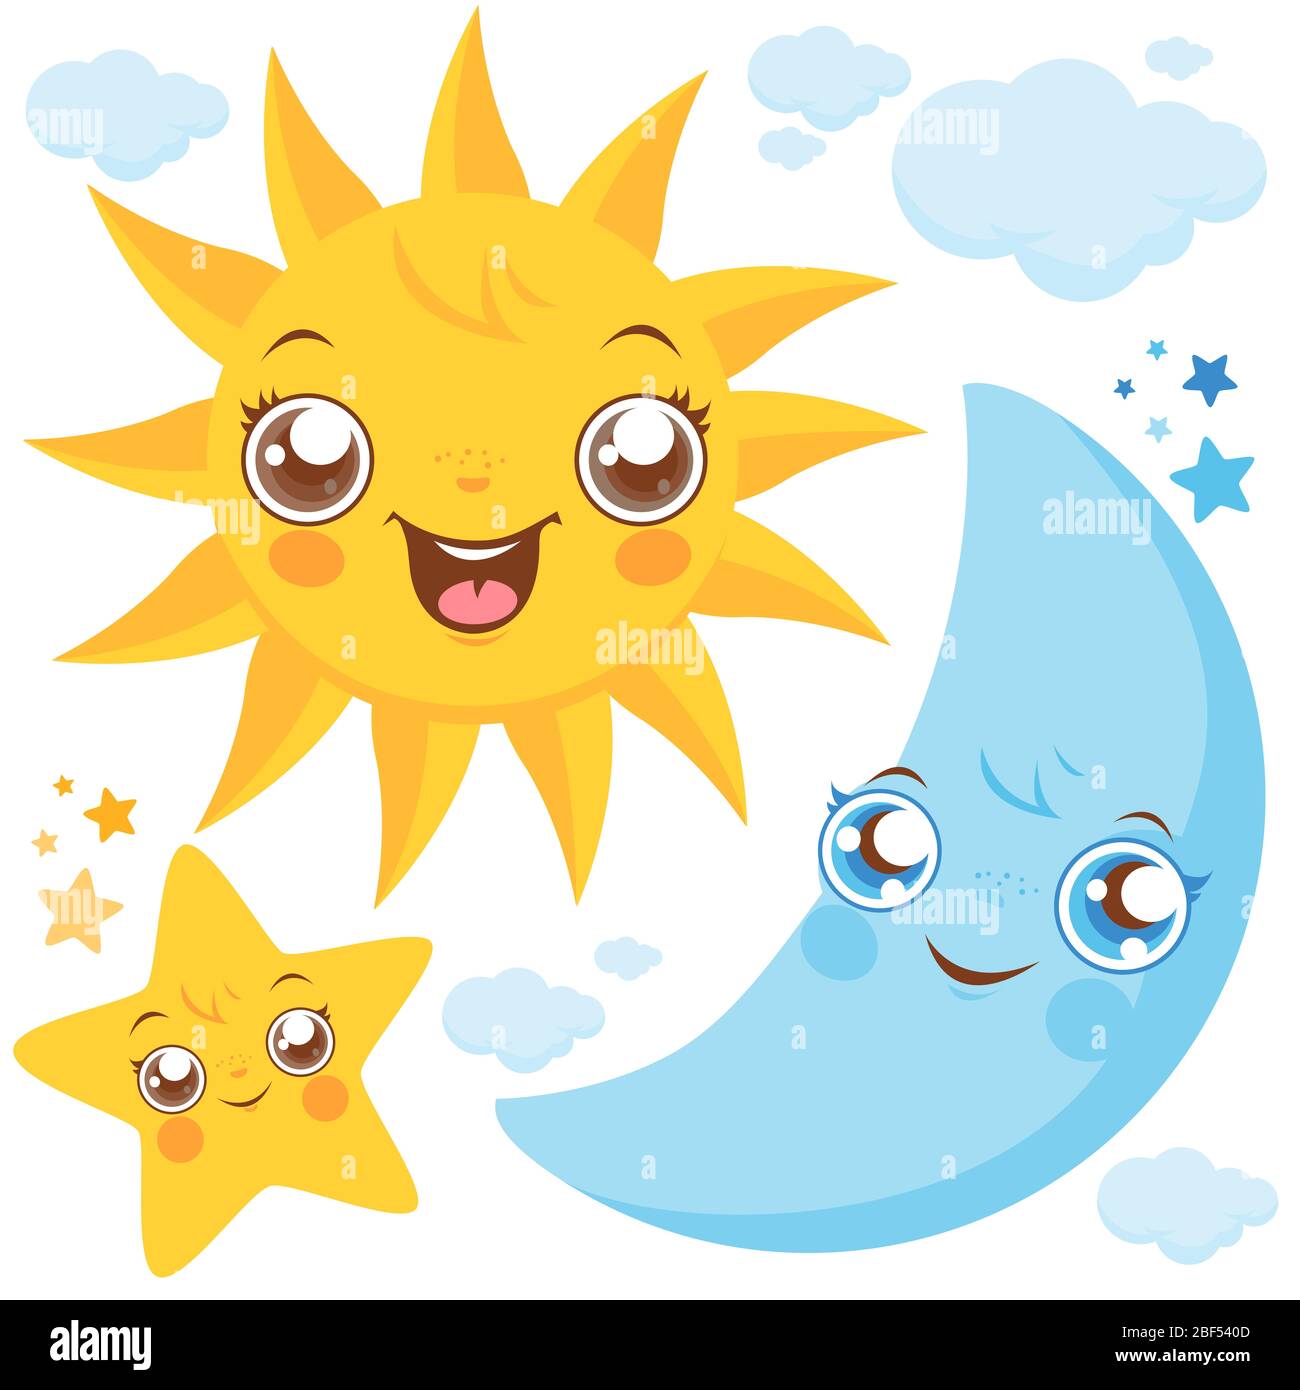 Illustration set of cute cartoon sun, moon, stars and cloud characters. Stock Photo